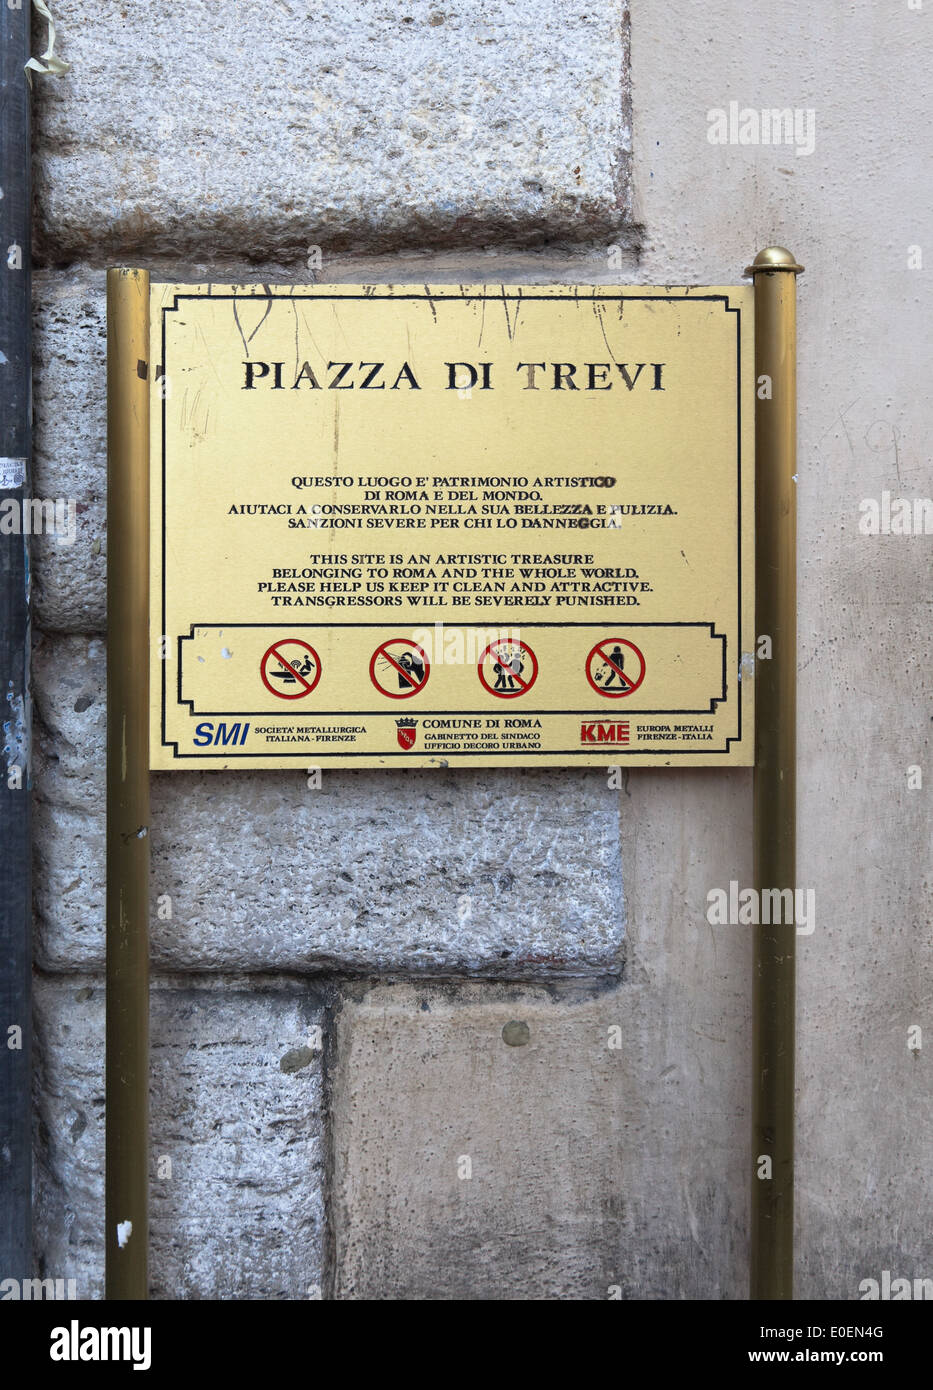 Schild Piazza di Trevi, Rom, Italien - Zeichen Piazza di Trevi, Rom, Italien Stockfoto